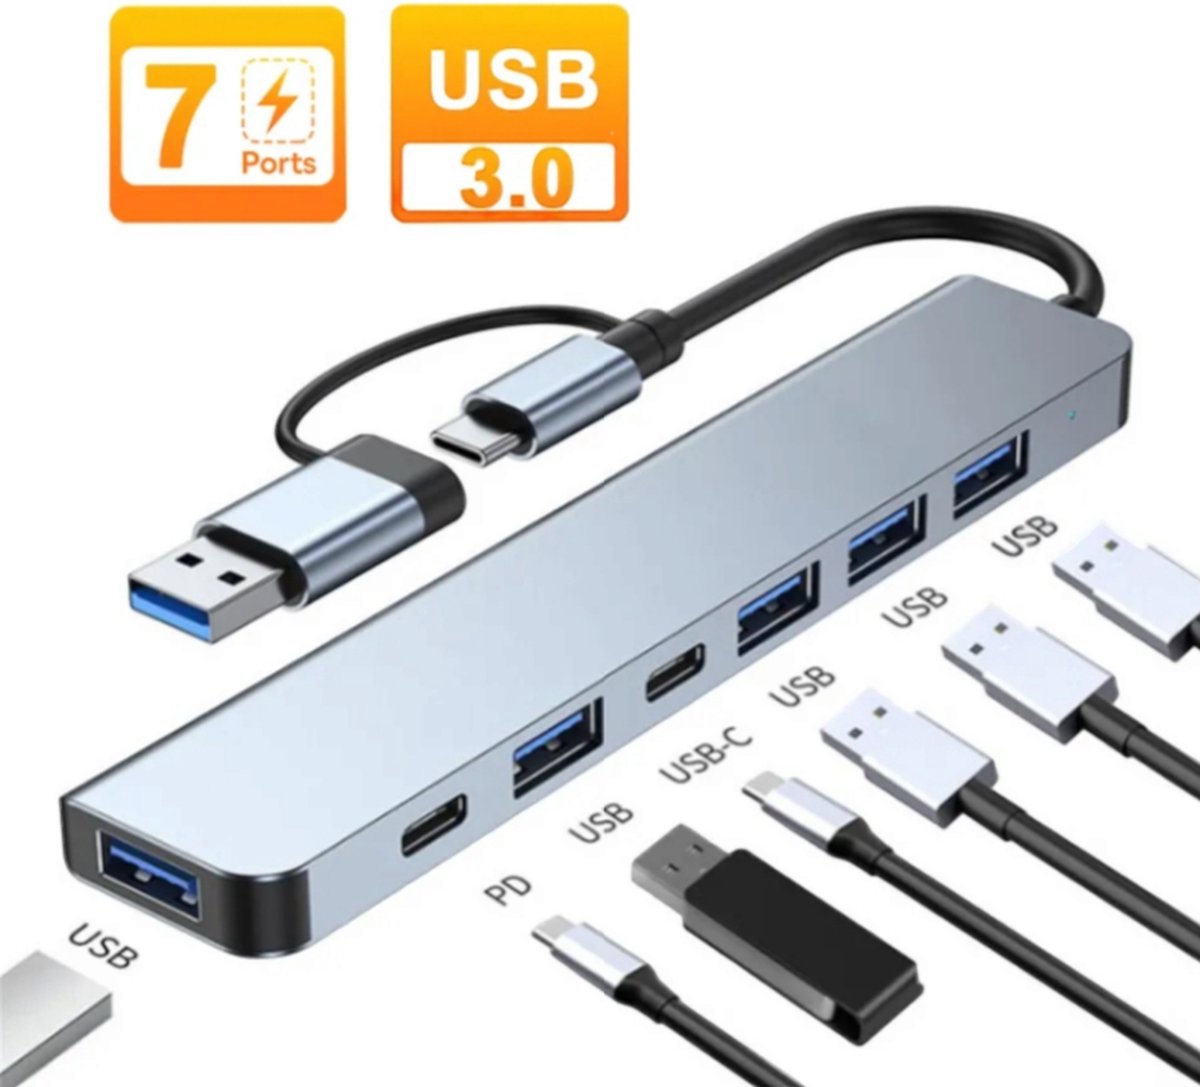 7 USB HUB Type-C - Usb 3. 0 - Multi-port - Fast Charge - HUB TYPE-C - Adapter - Laptop - Tablet - Smartphone - USB OtG - Android - HUB 7 in 1